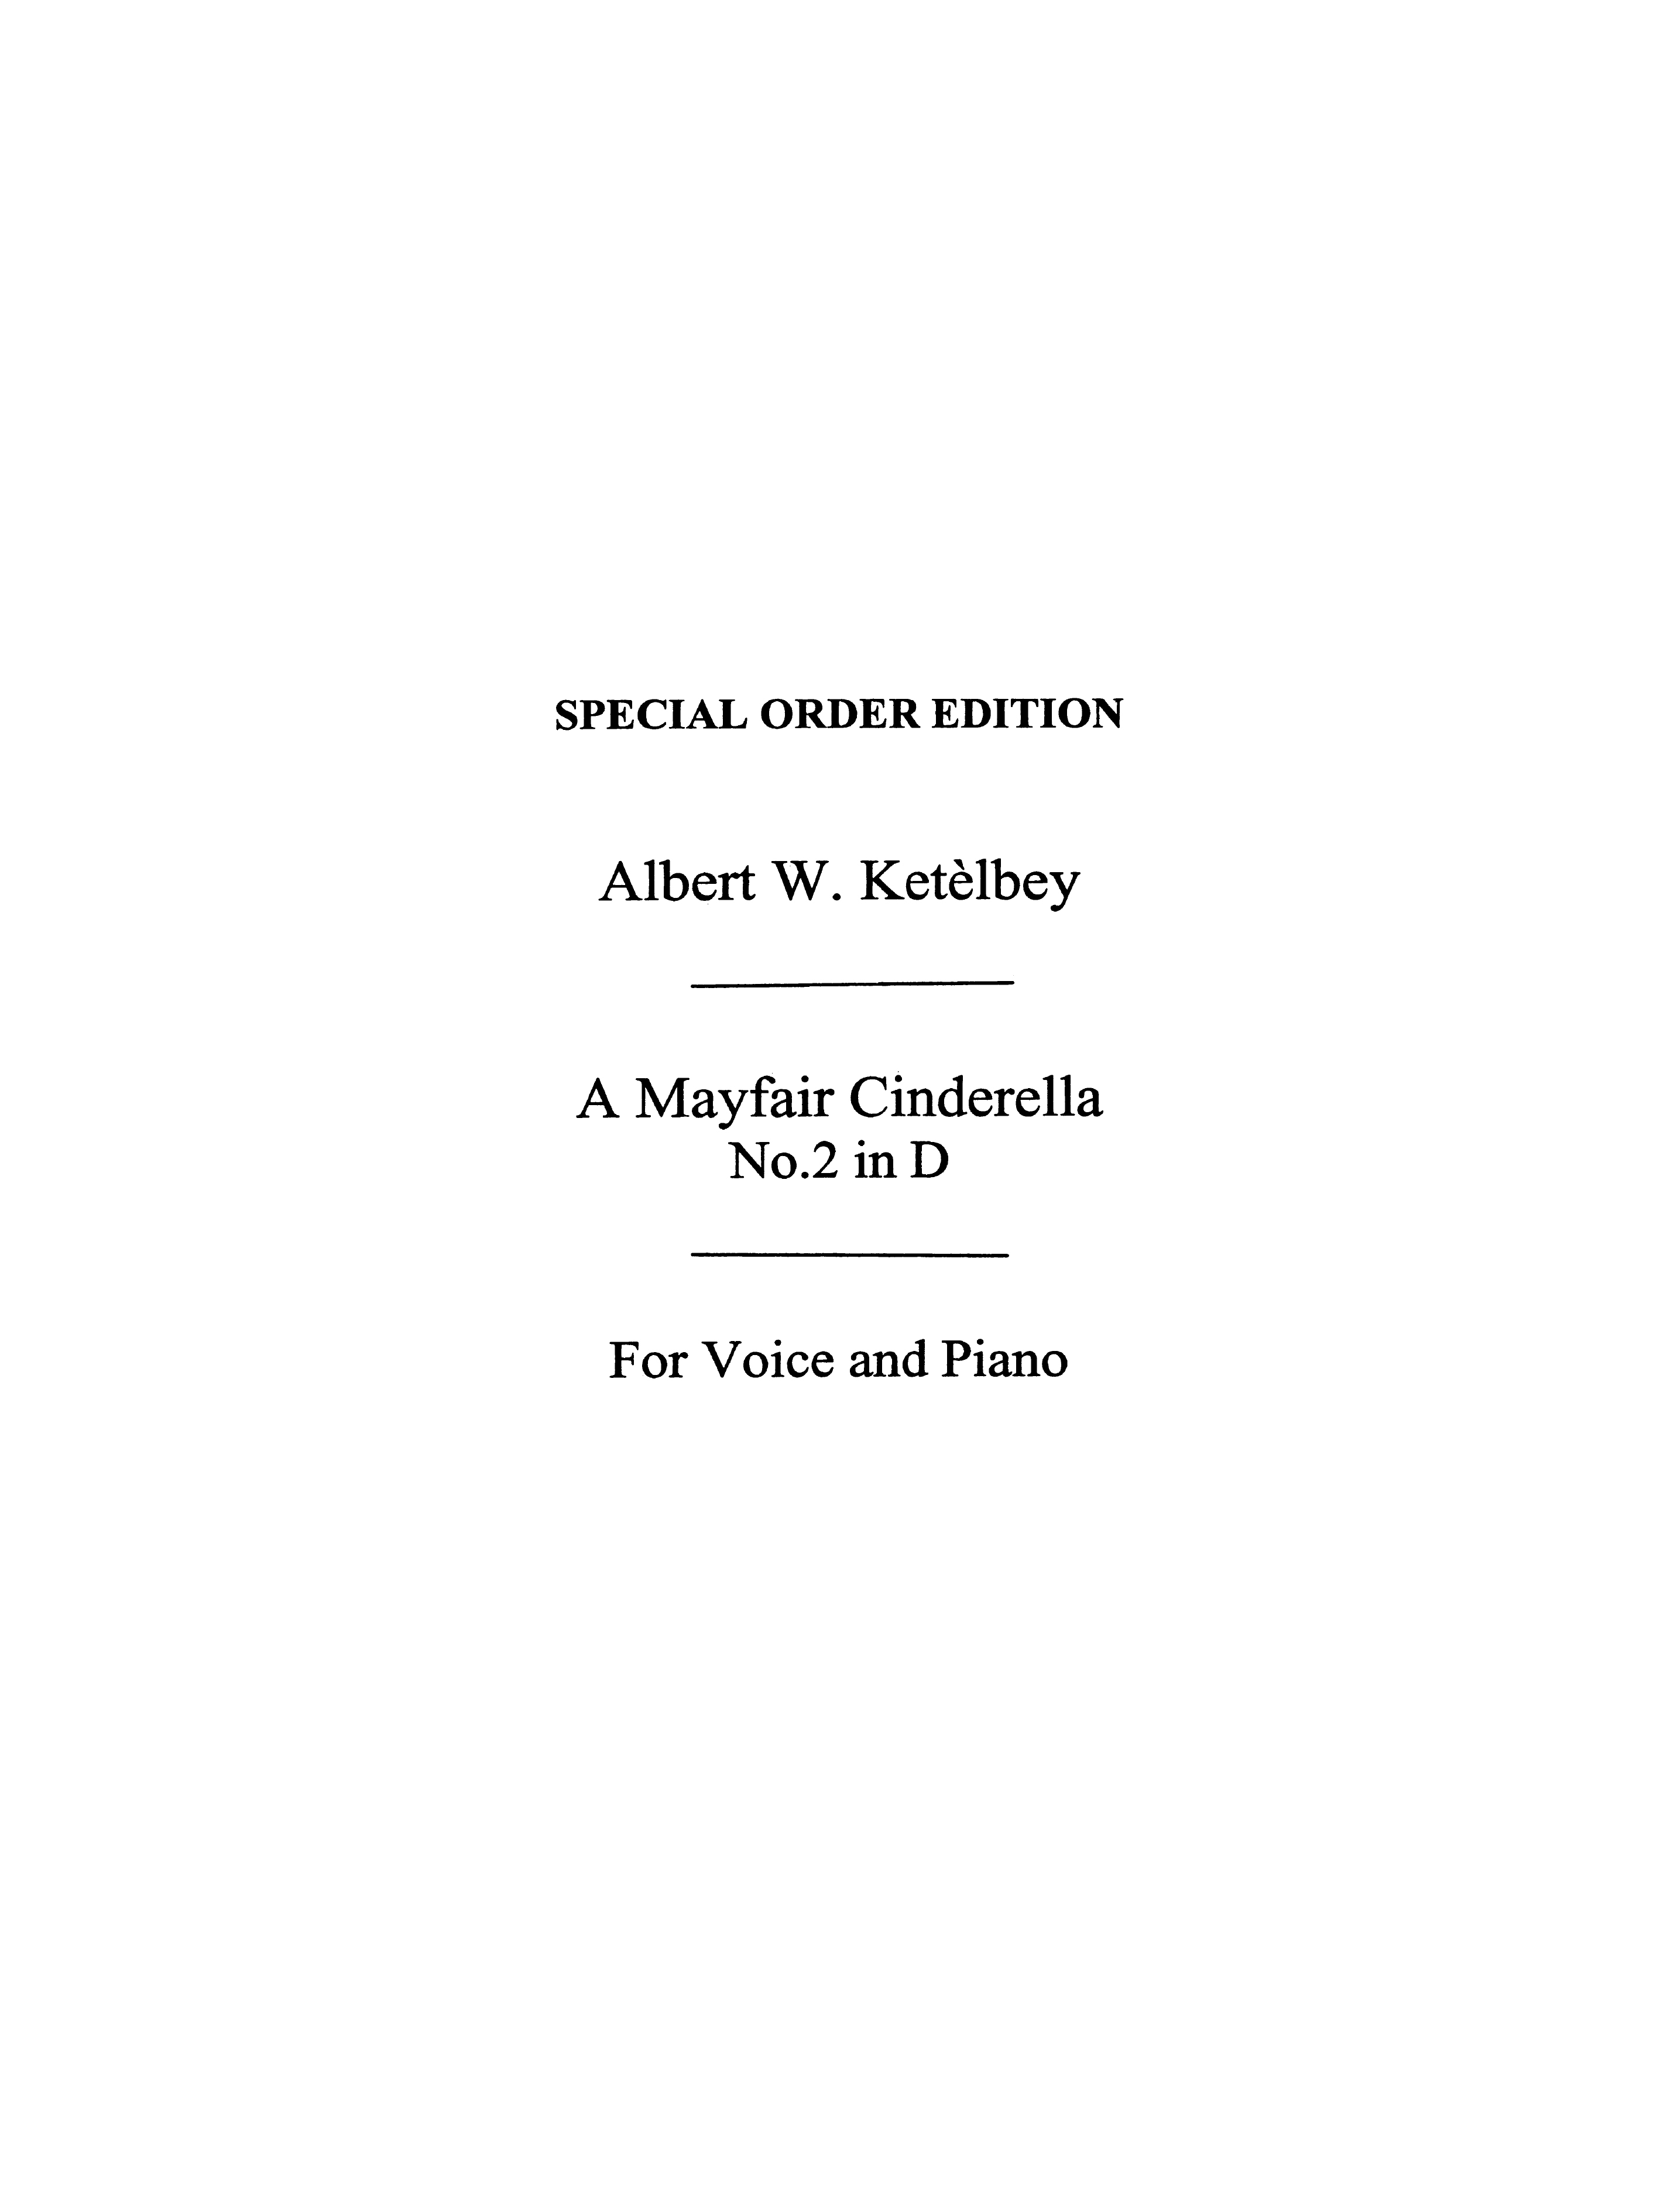 Albert Ketlbey: Mayfair Cinderella: Voice: Single Sheet